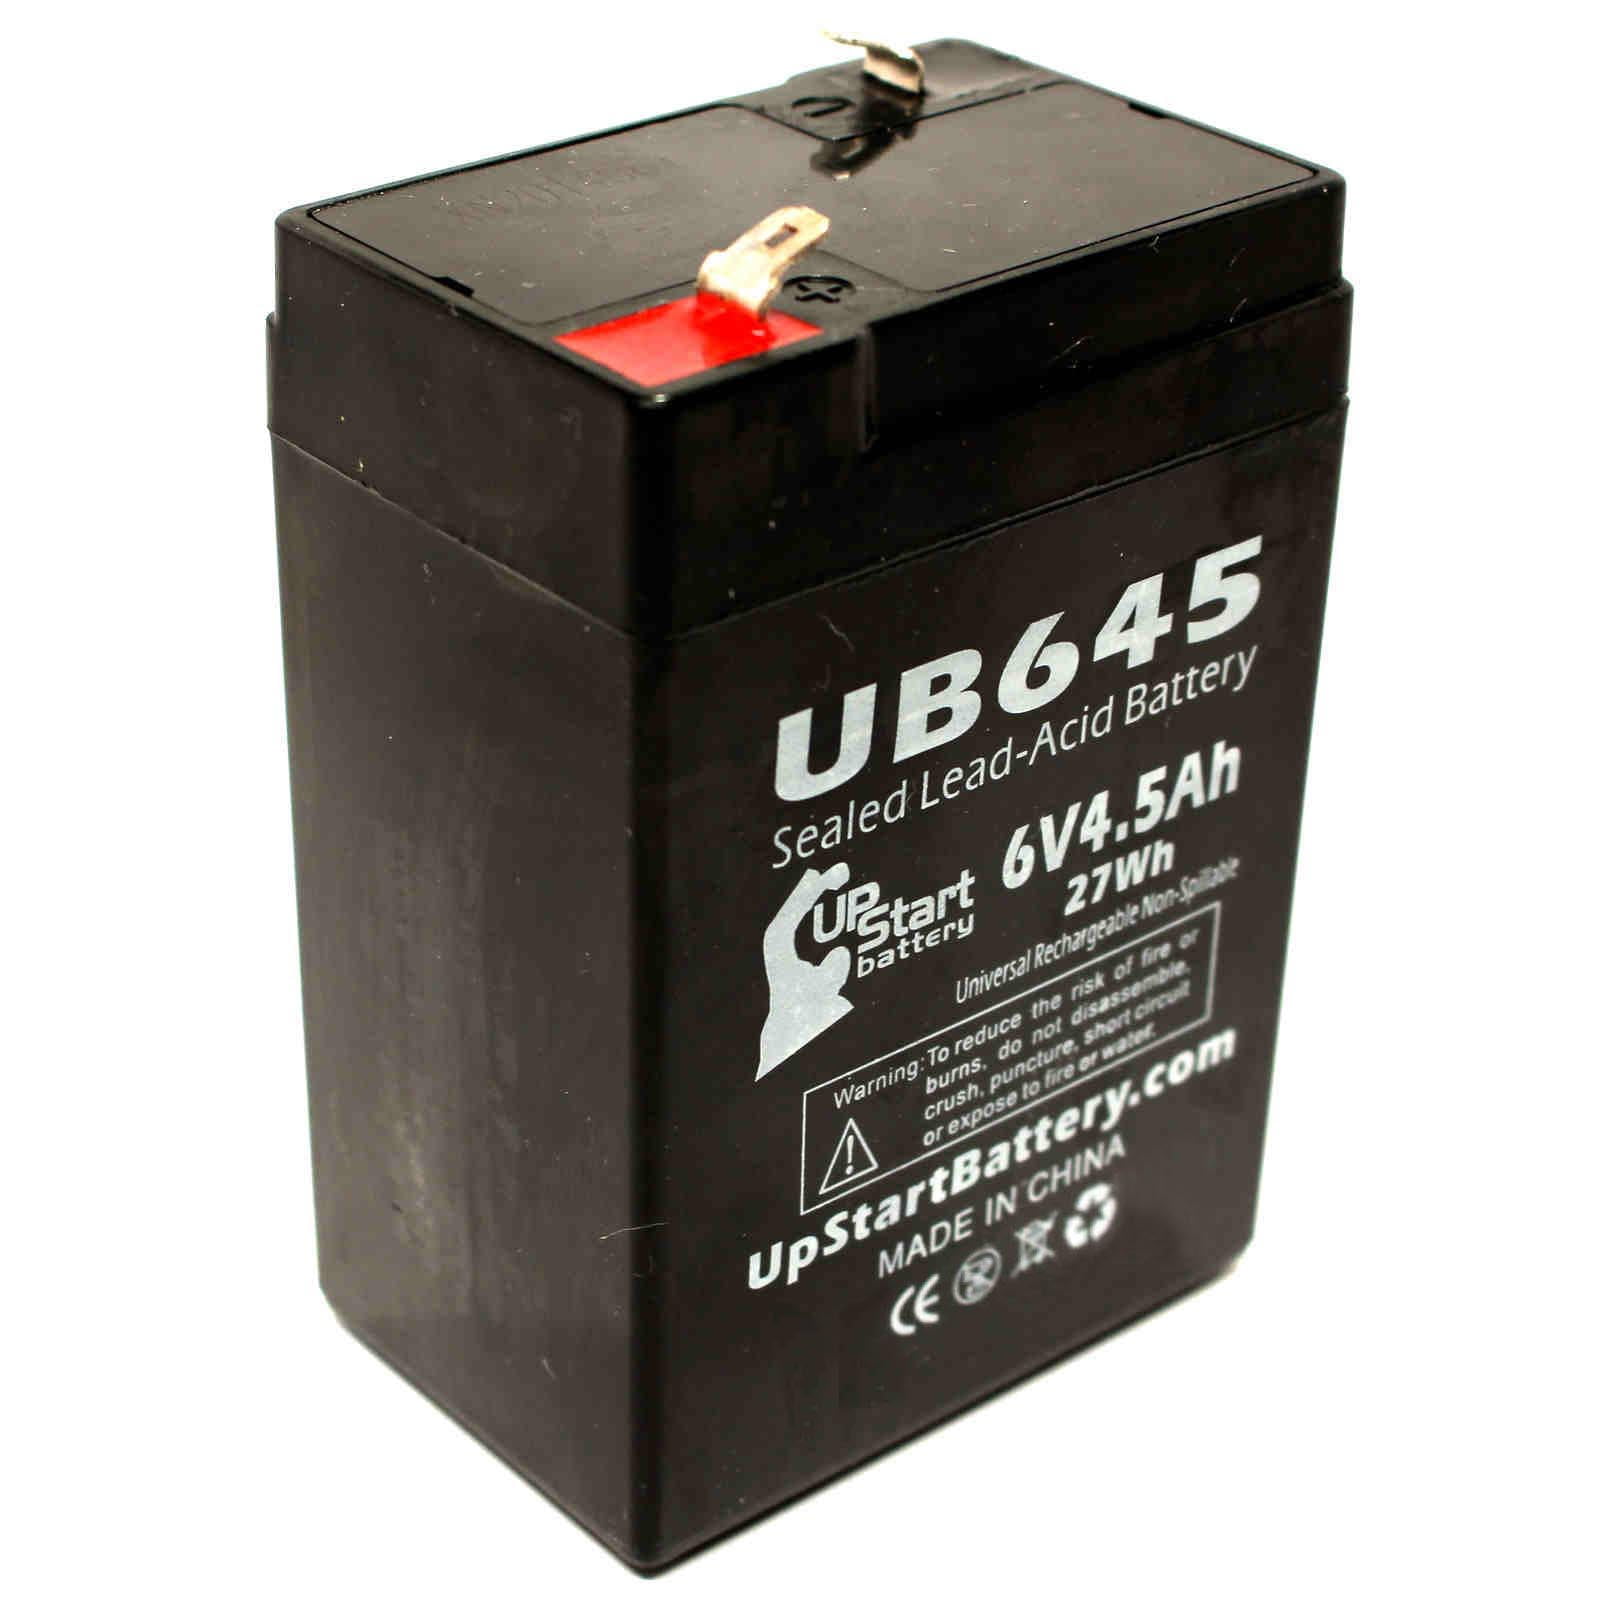 Sealed battery. Батарея Sealed lead-acid Rechargeable 4v. Sealed Rechargeable lead-acid Battery 6v. Аккумулятор Sealed lead-acid Battery. Lead acid аккумулятор 4v.